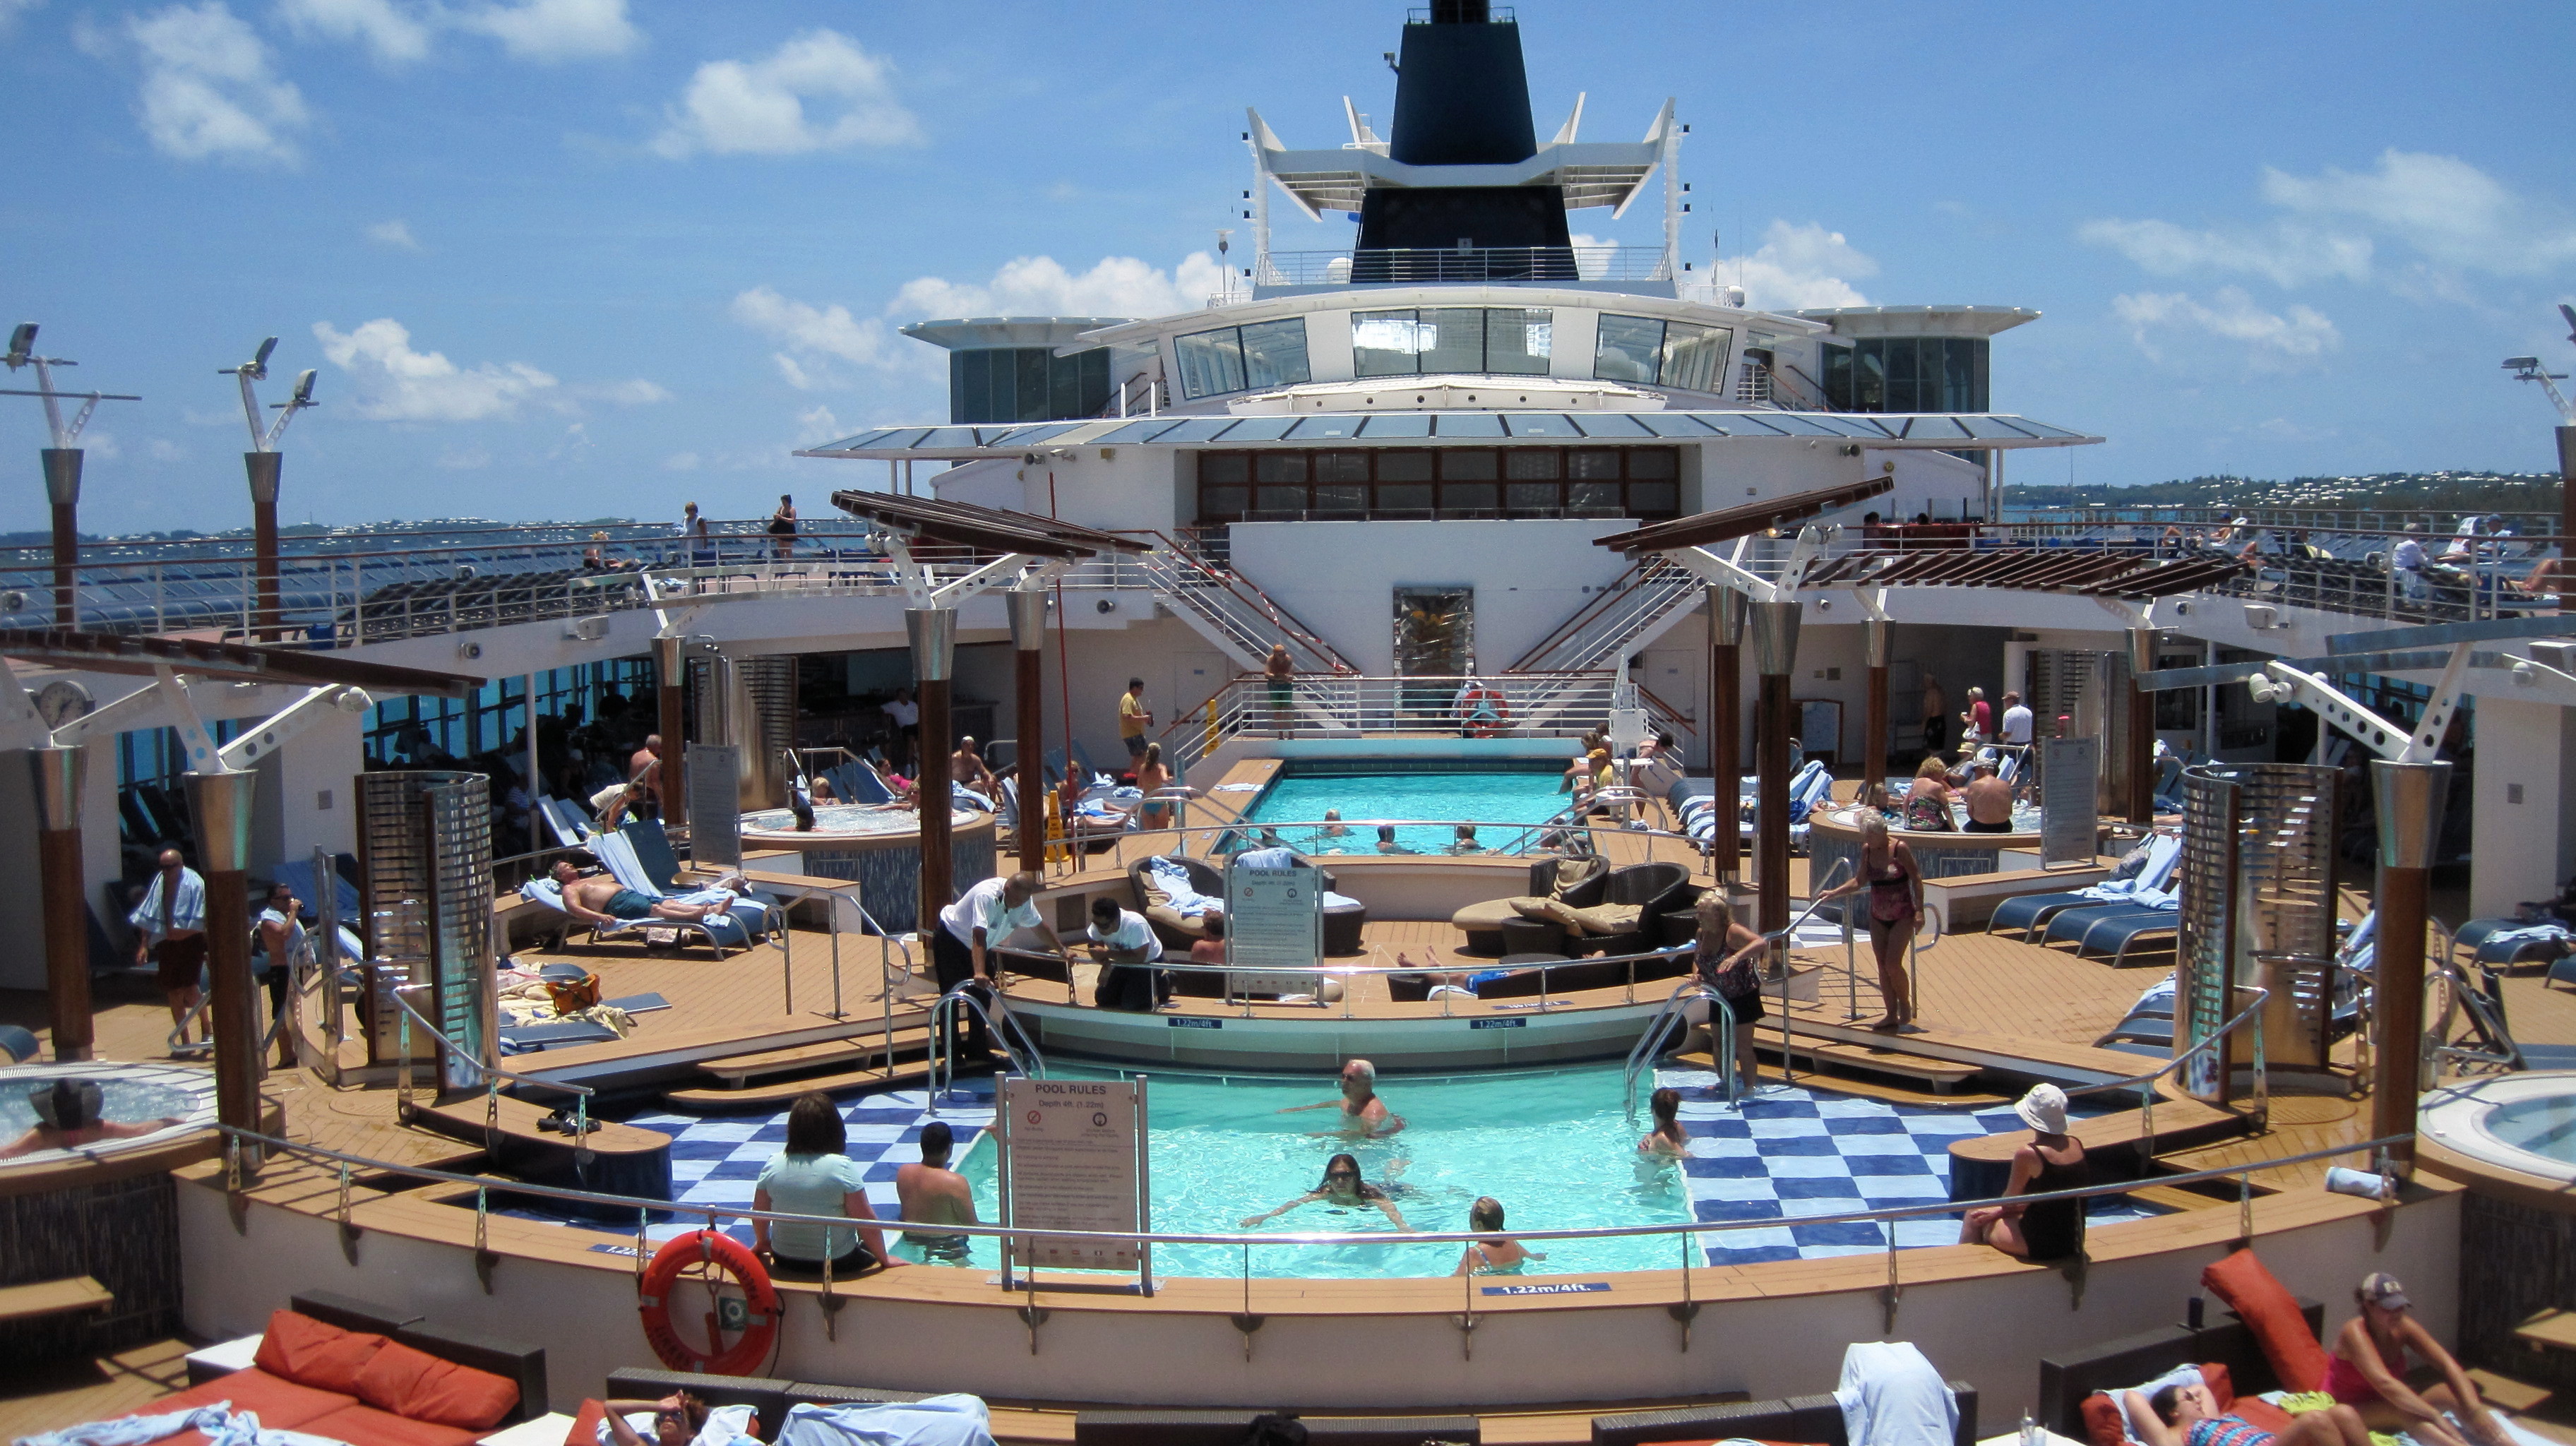 celebrity summit bermuda cruise reviews